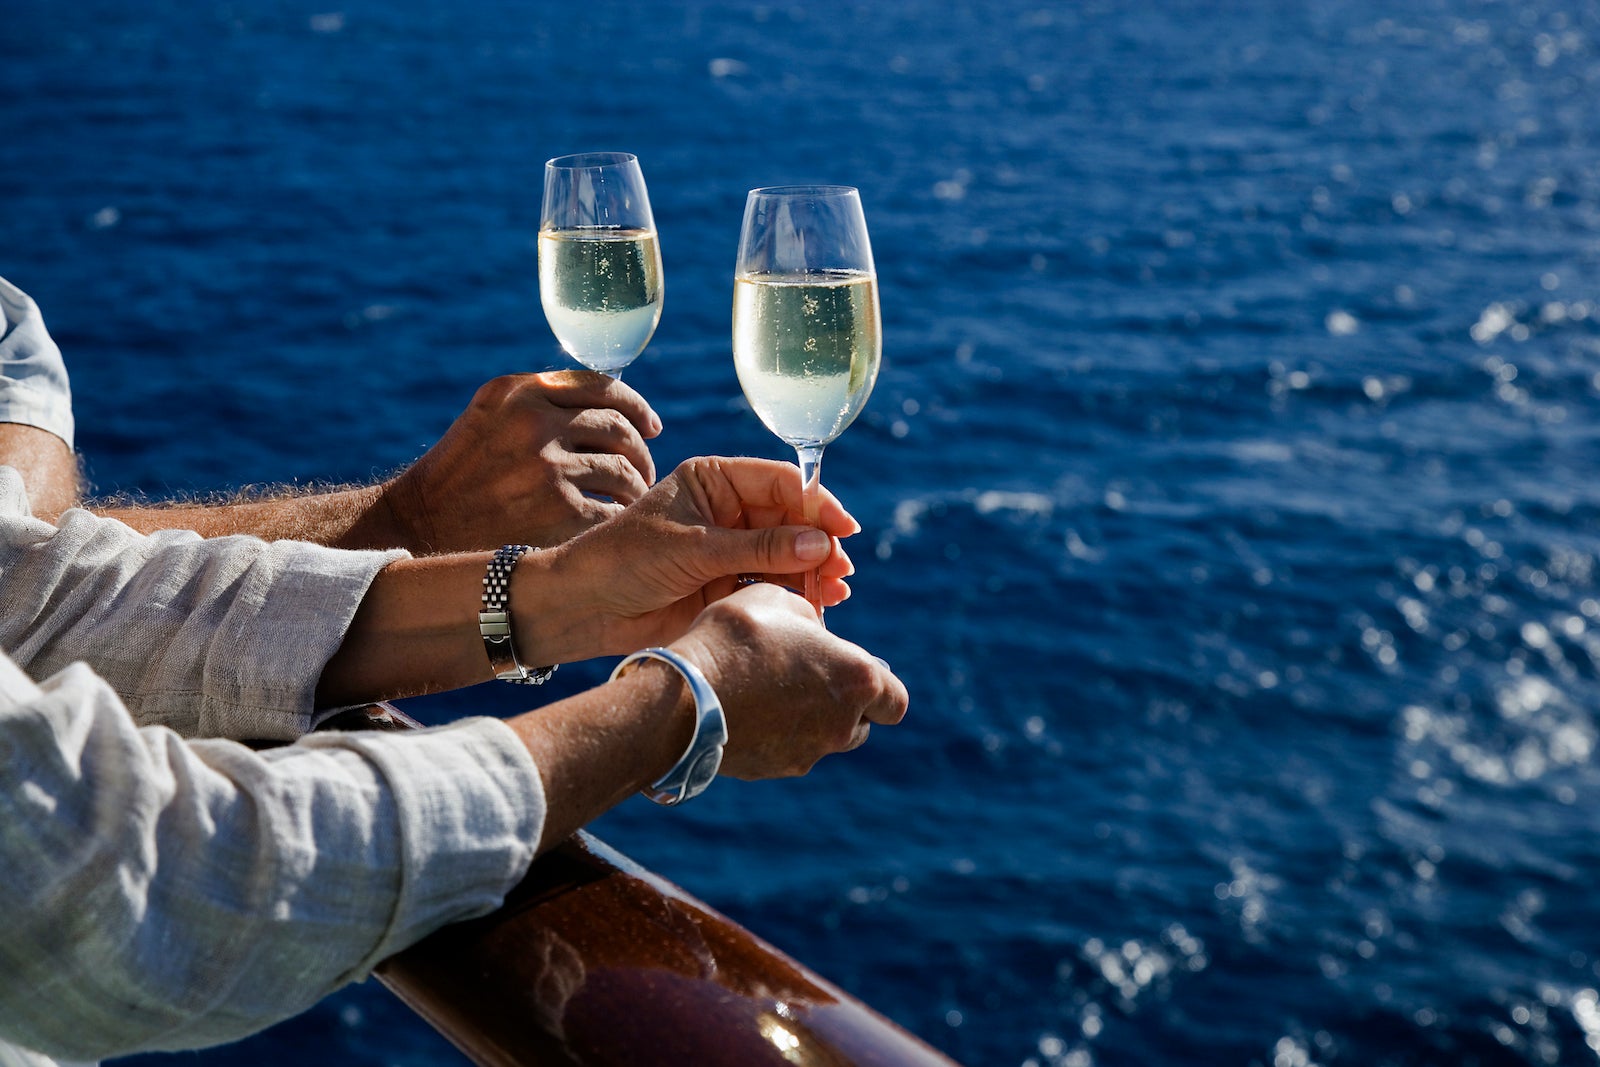 bring alcohol on msc cruise